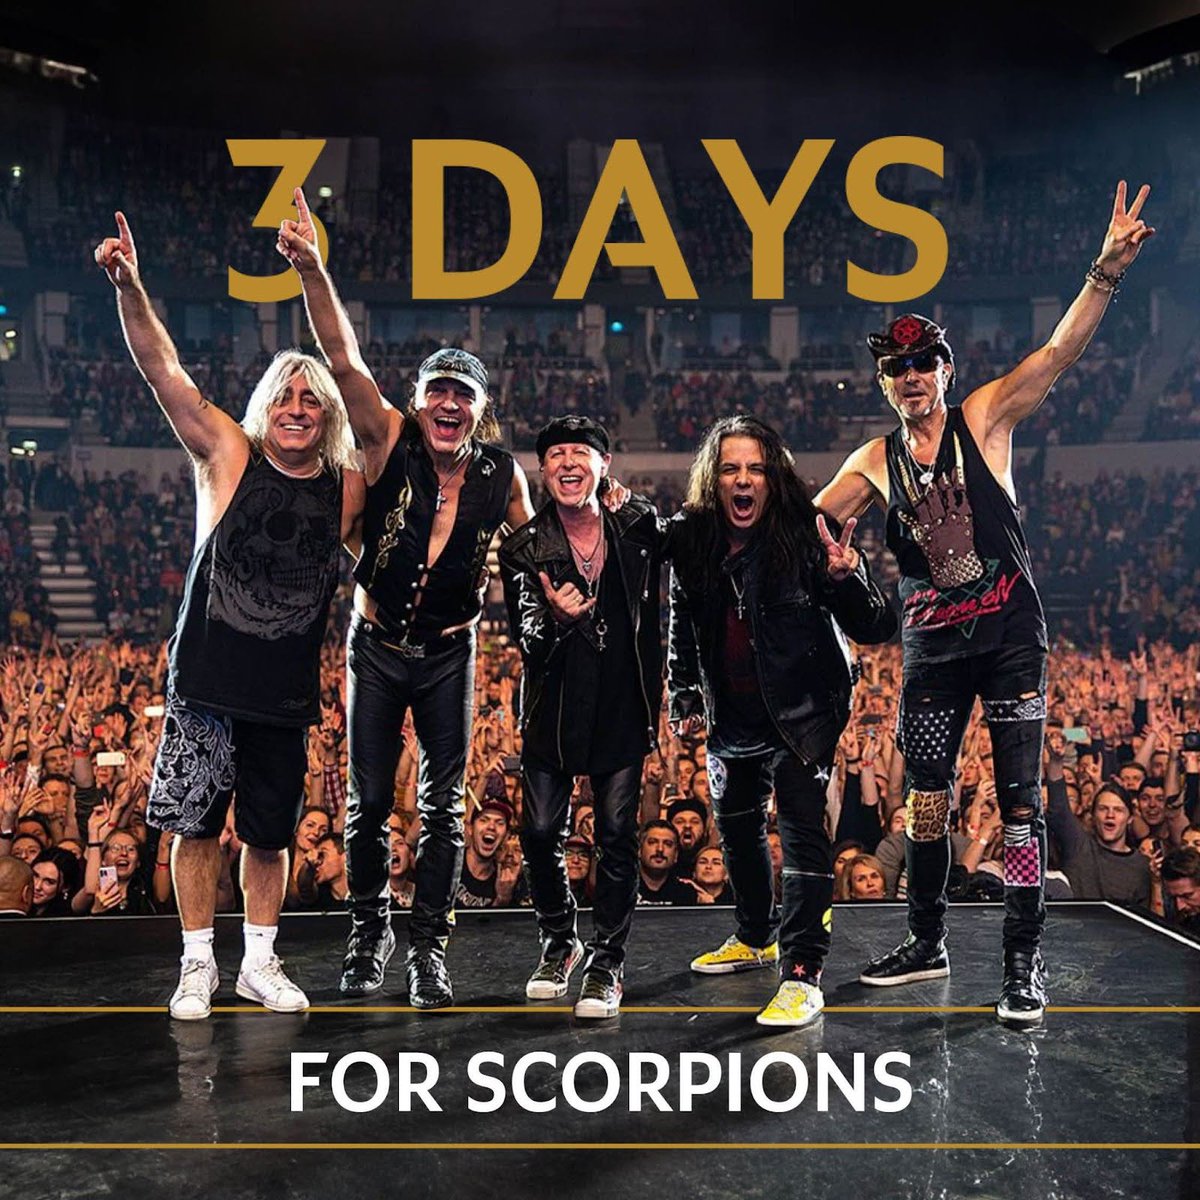 Only 3 days left until the Scorpions rock our world at Etihad Arena! 🚀

@yasisland @yasbayuae @inabudhabi @livenationme @scorpions

#RediscoverEntertainment #RediscoverAD #ExperienceExtraordinary #InAbuDhabi